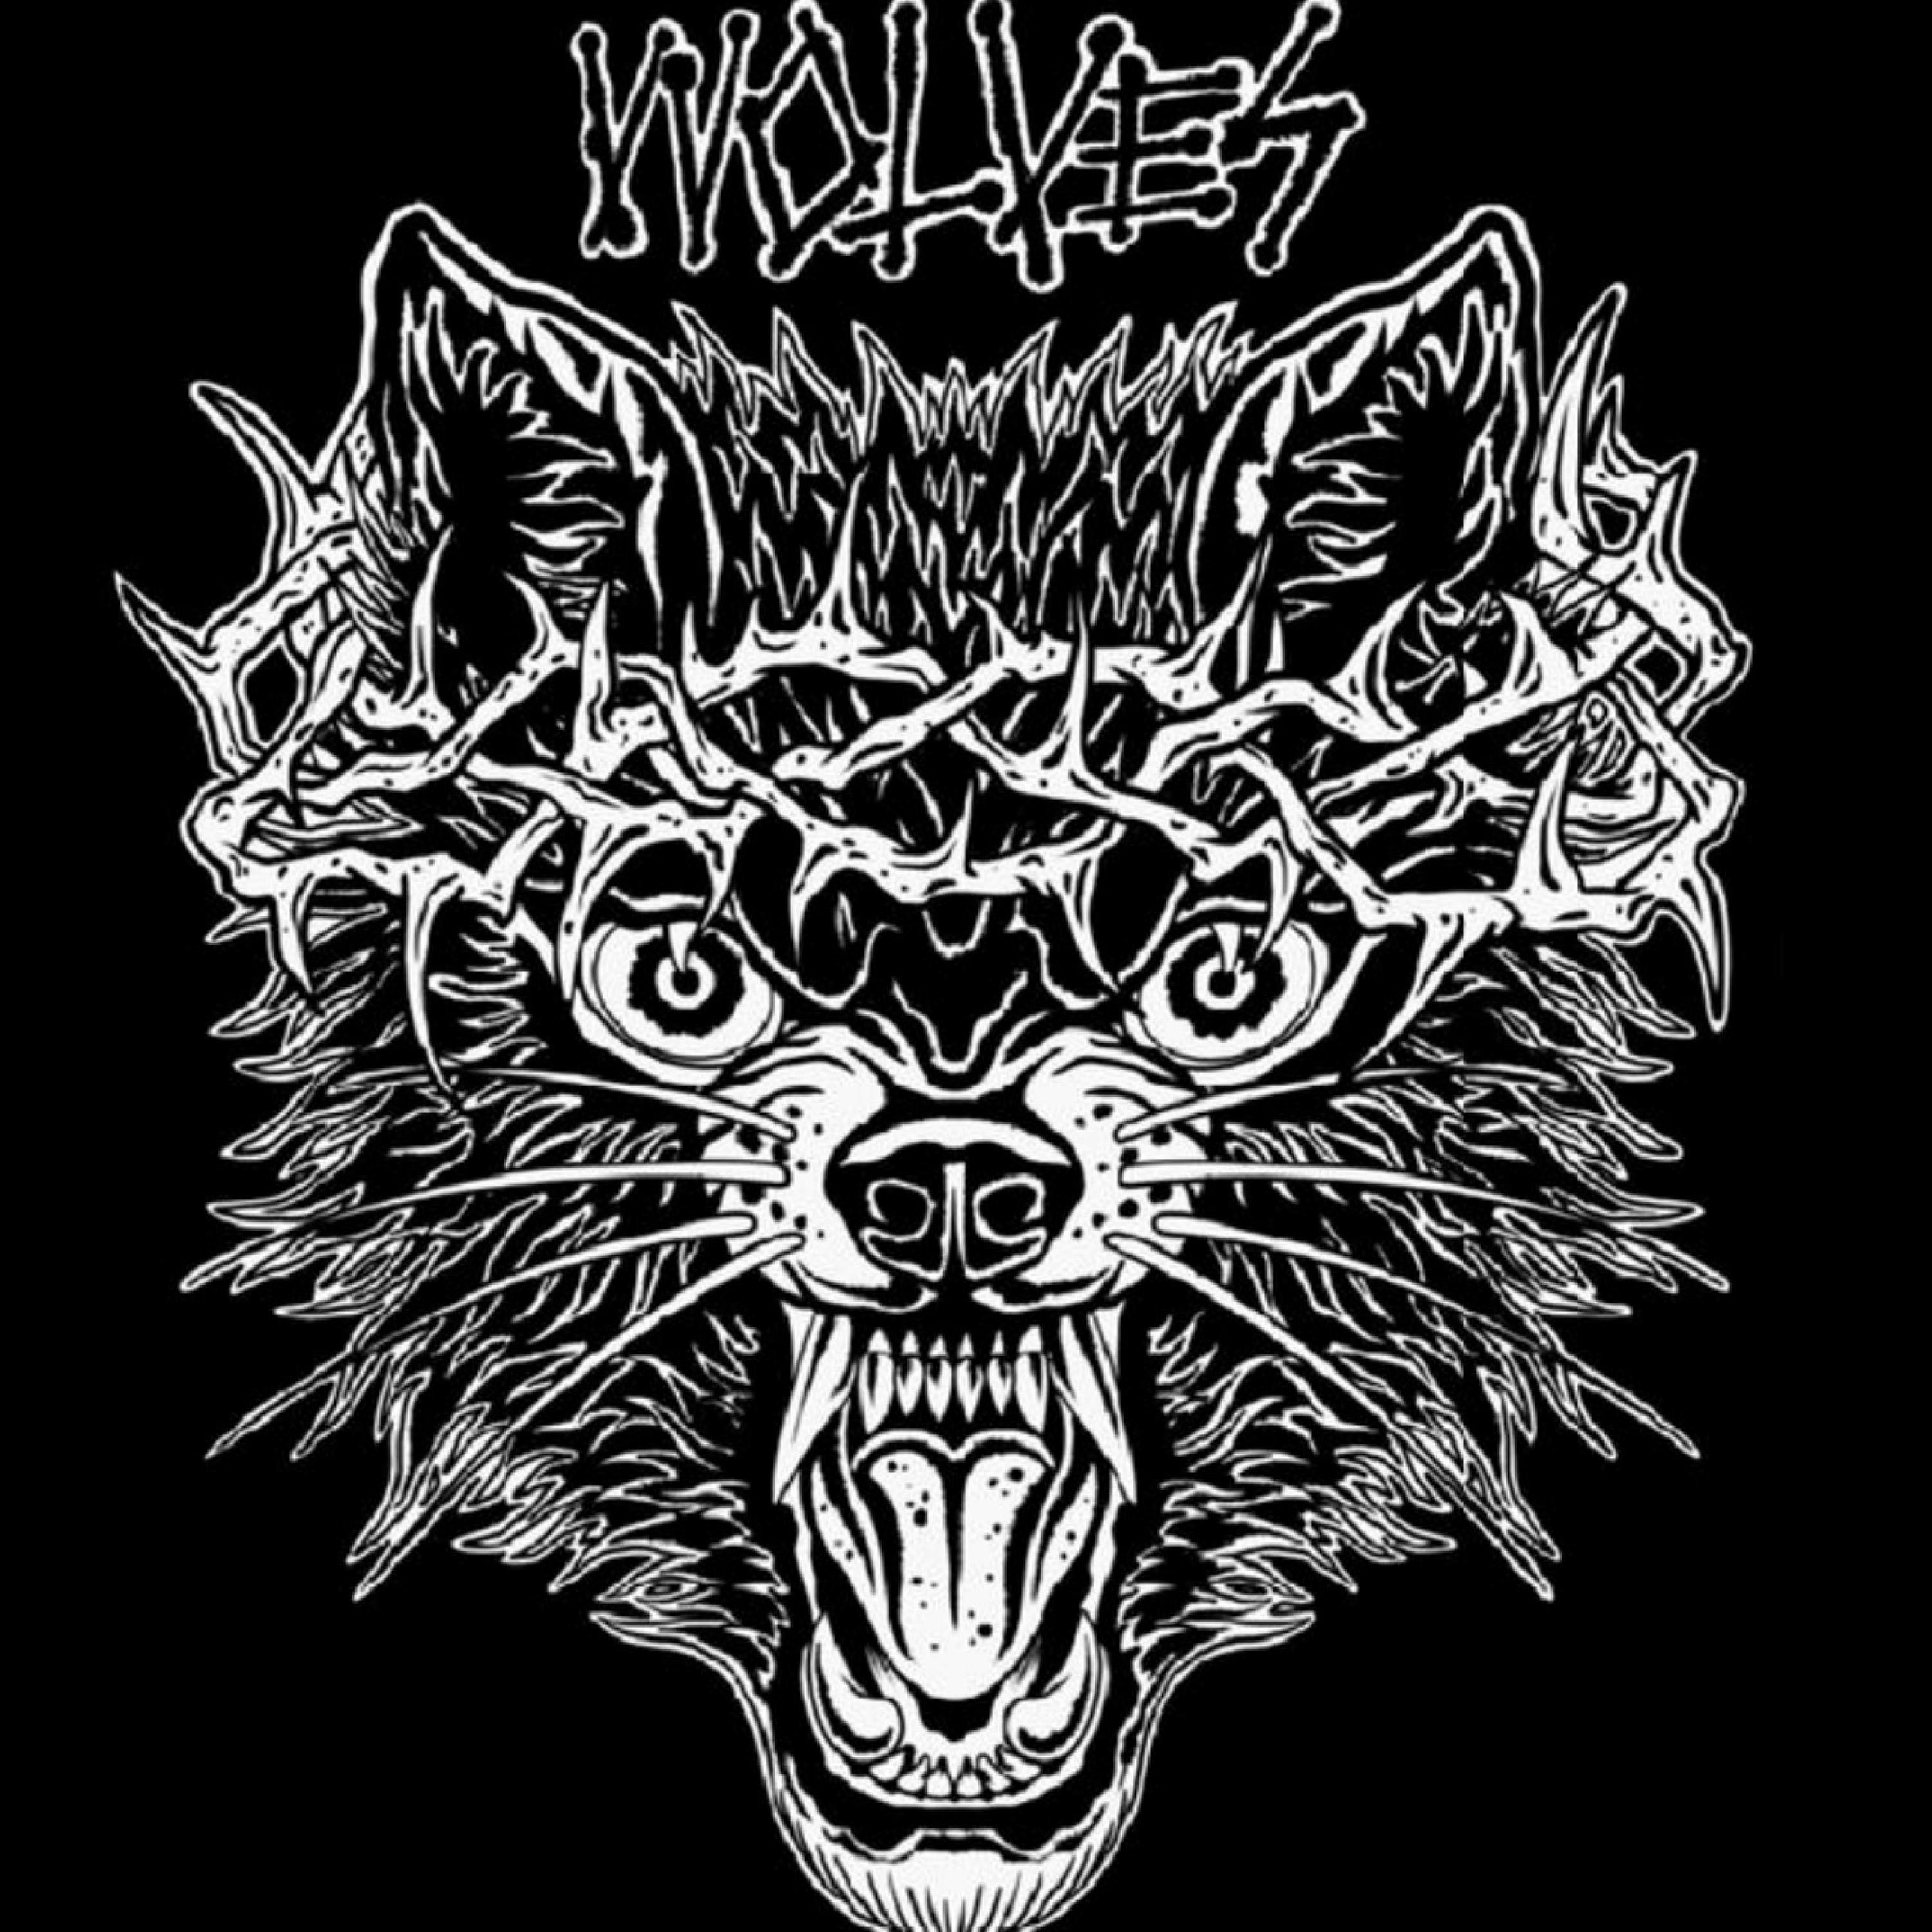 Wolves - Wolves